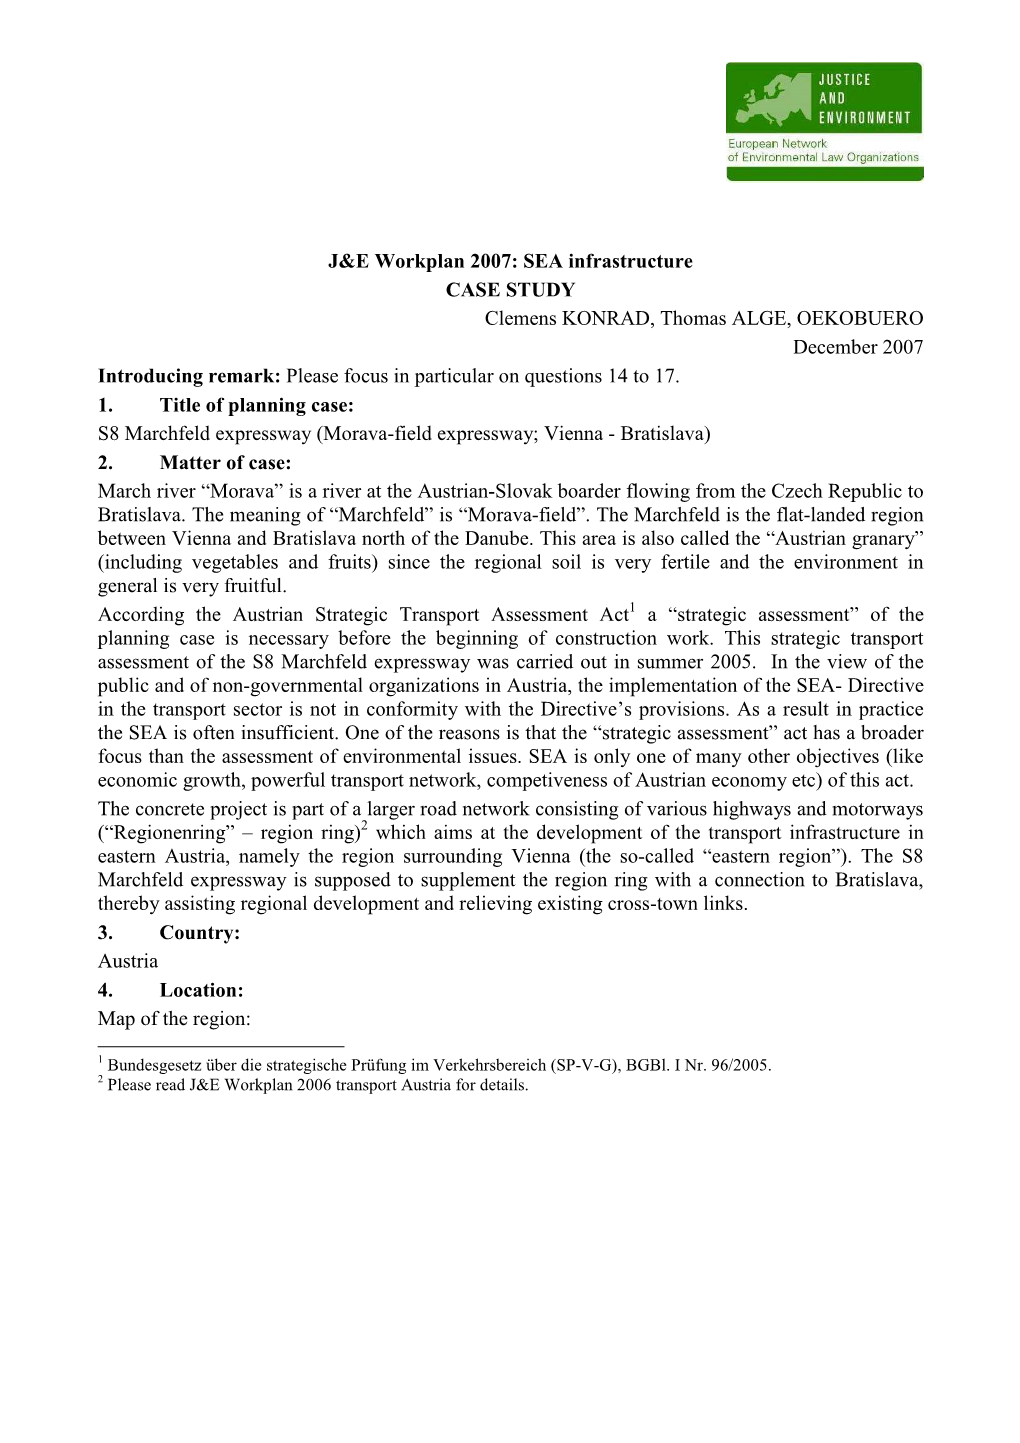 SEA WP07 Austria Case Study/03.06.2009/Page 2/17